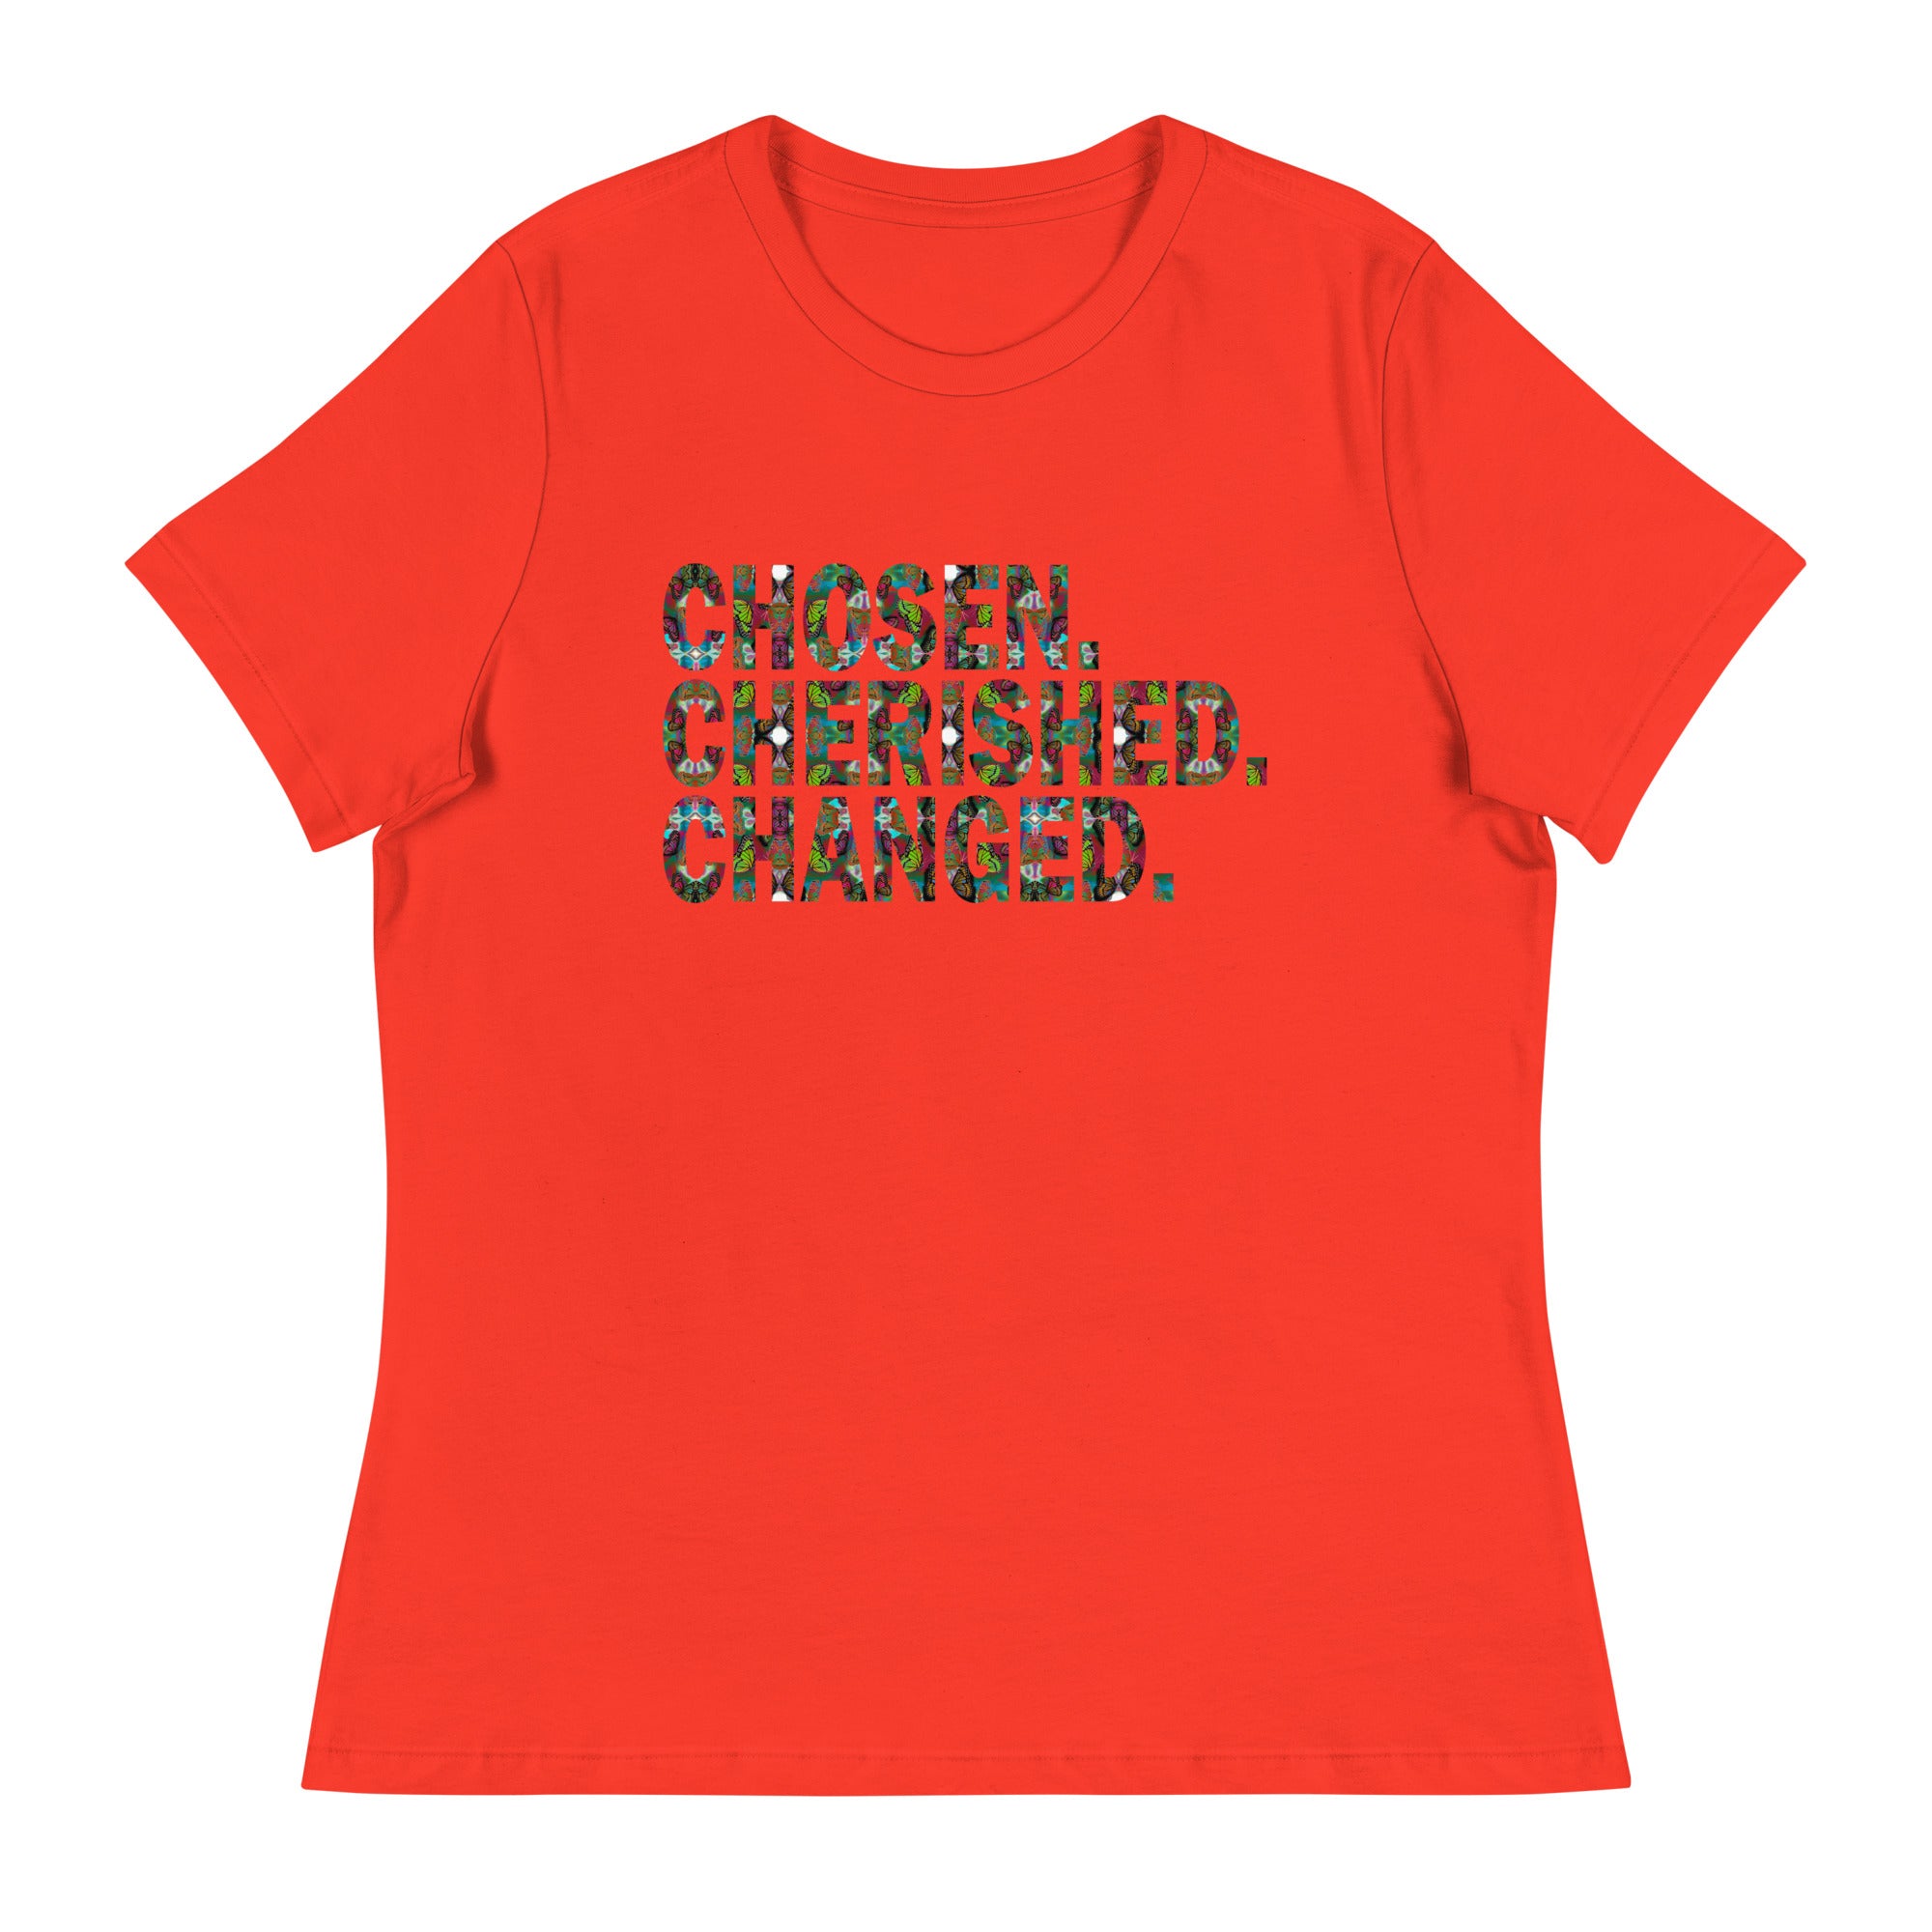 Chosen. Cherished. Changed. Women's Buttefly Word Art Graphic T-Shirt